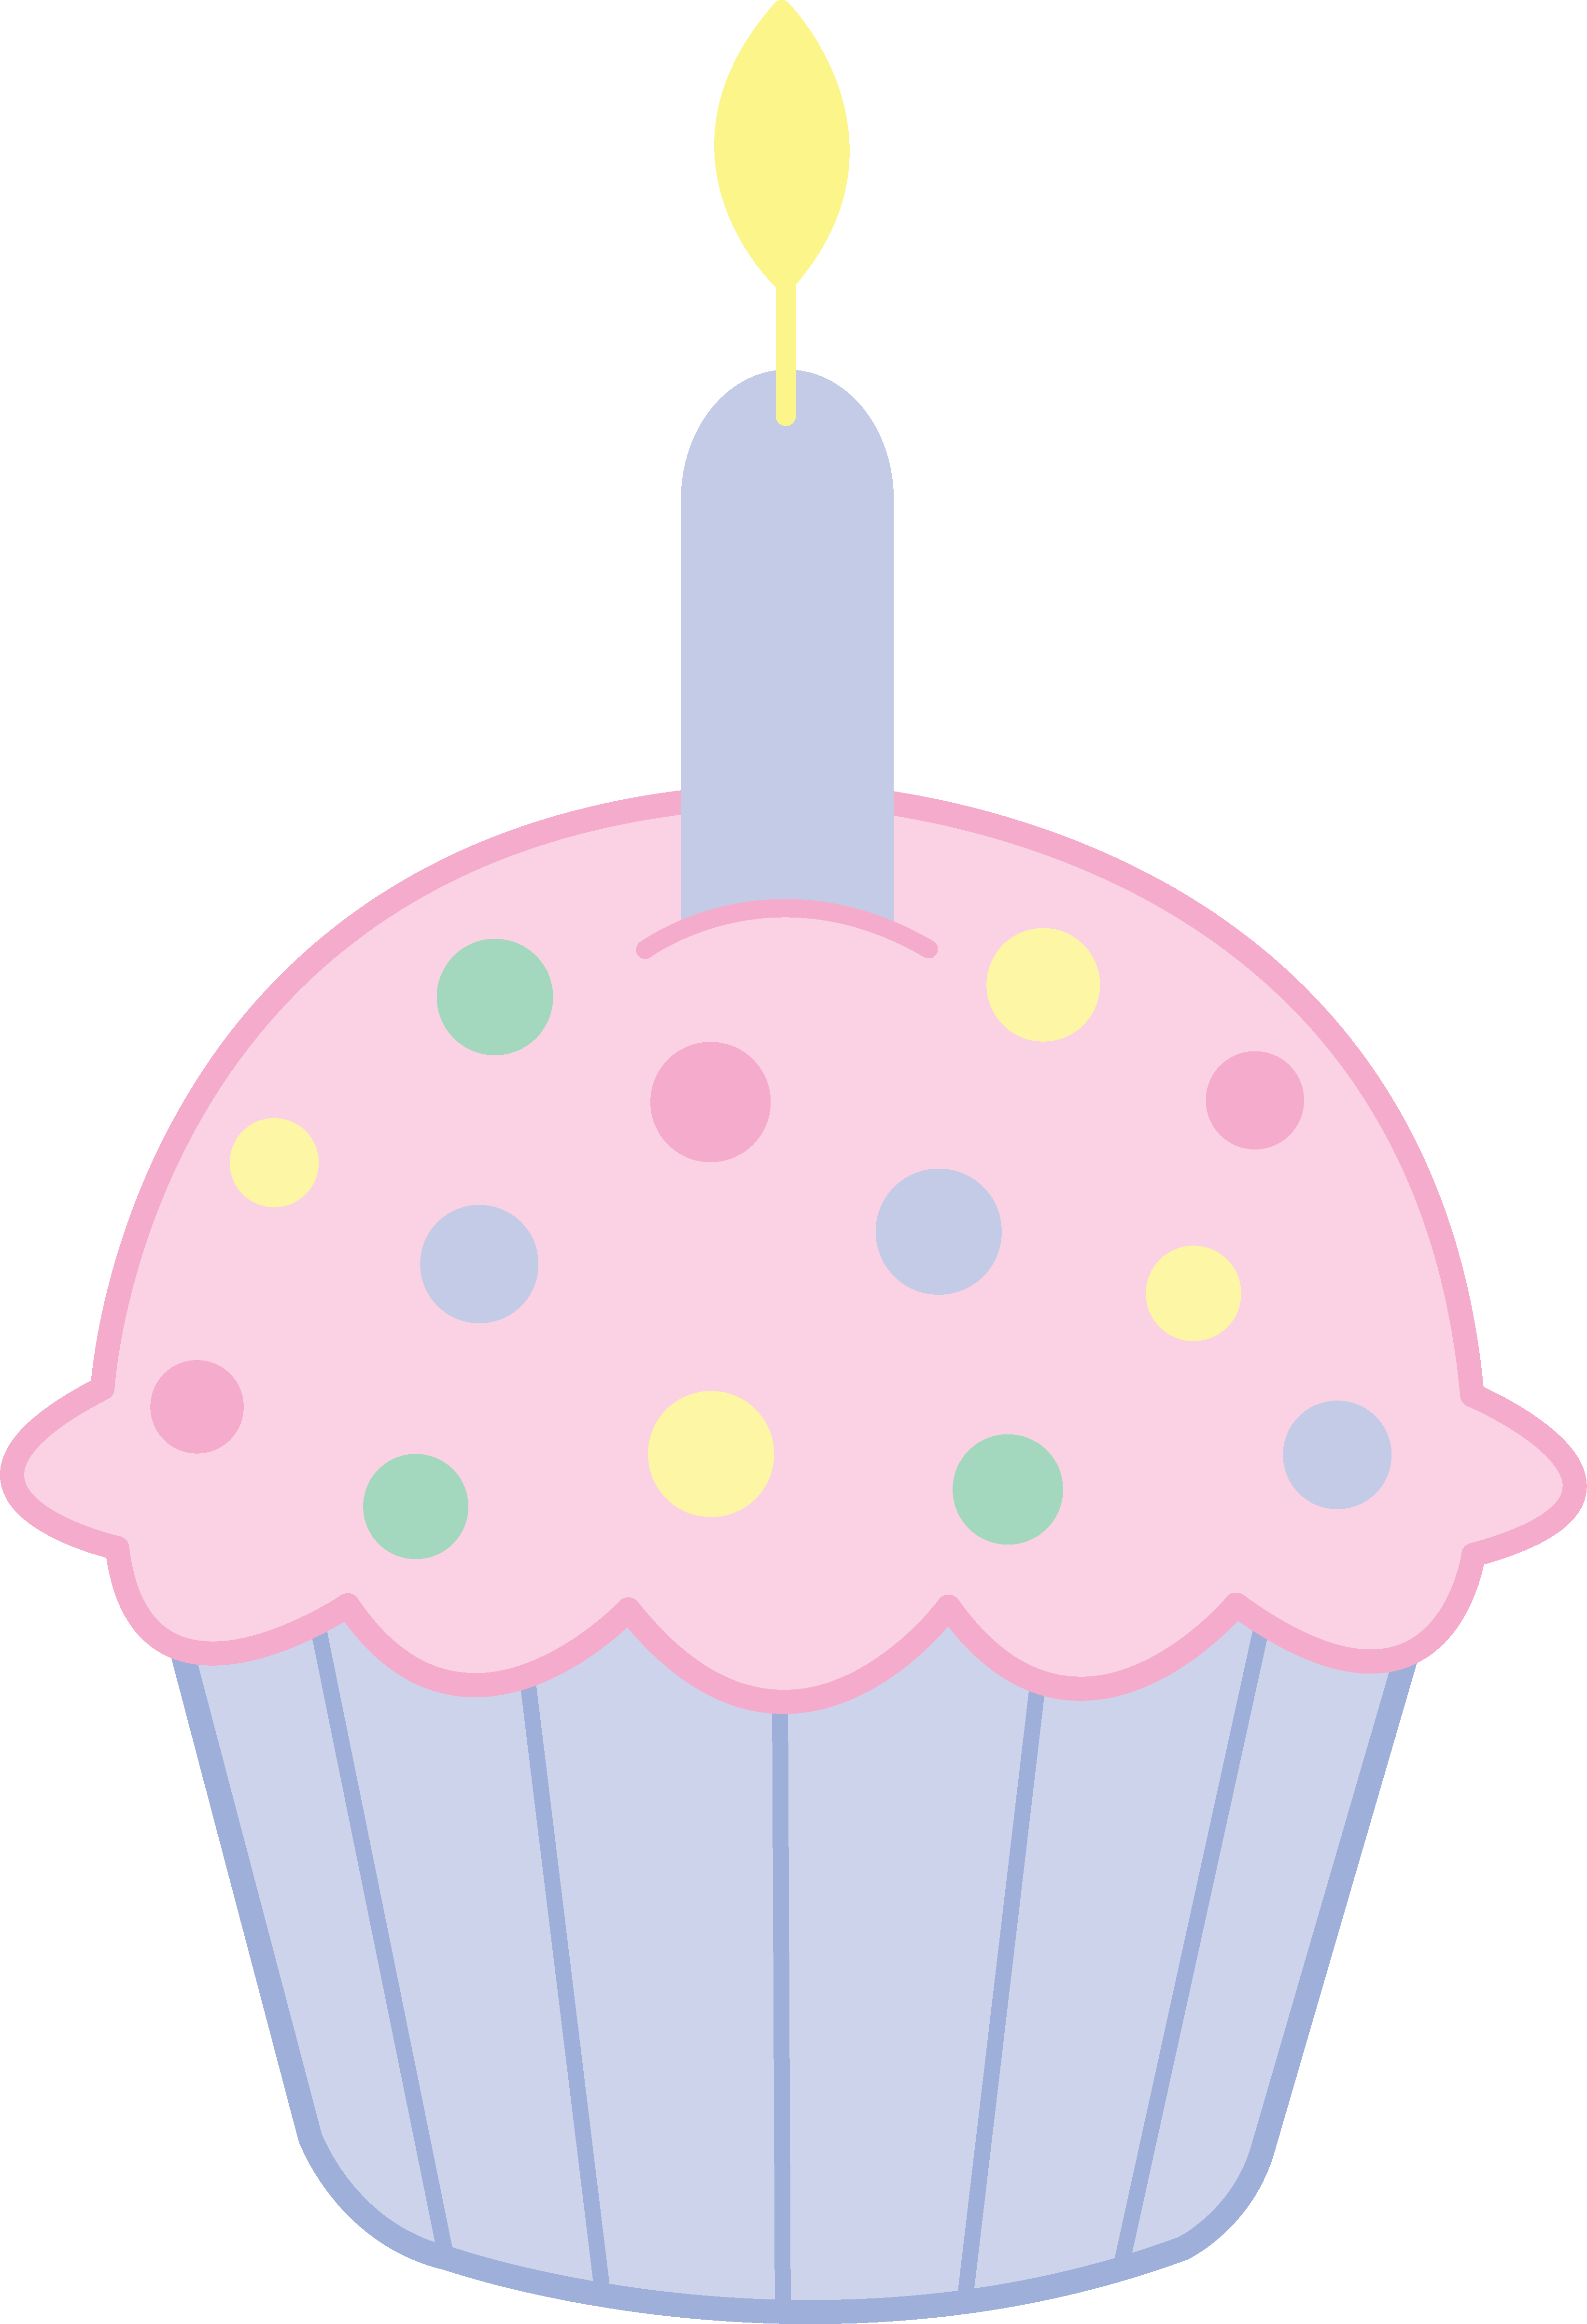 Cupcakes clipart baking. Cute pink birthday cupcake